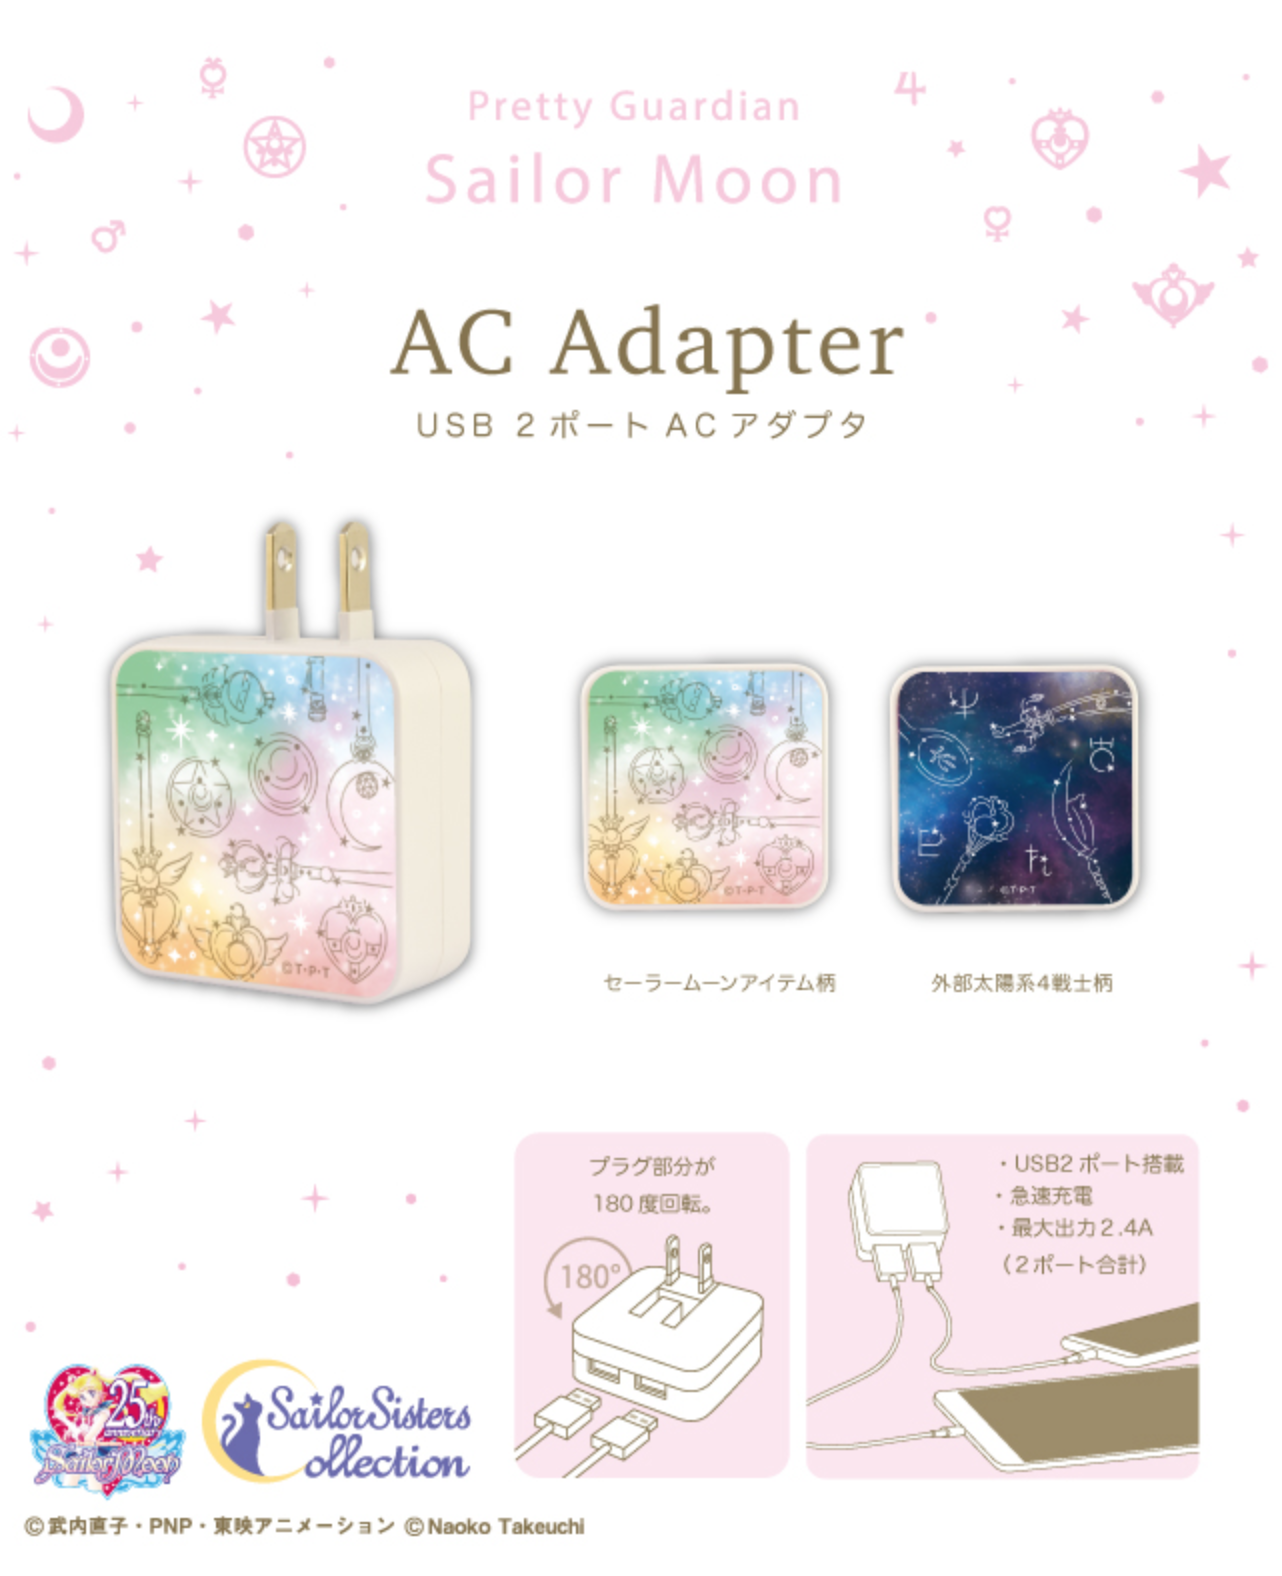 Sailor Moon x Gourmandise AC Adapters